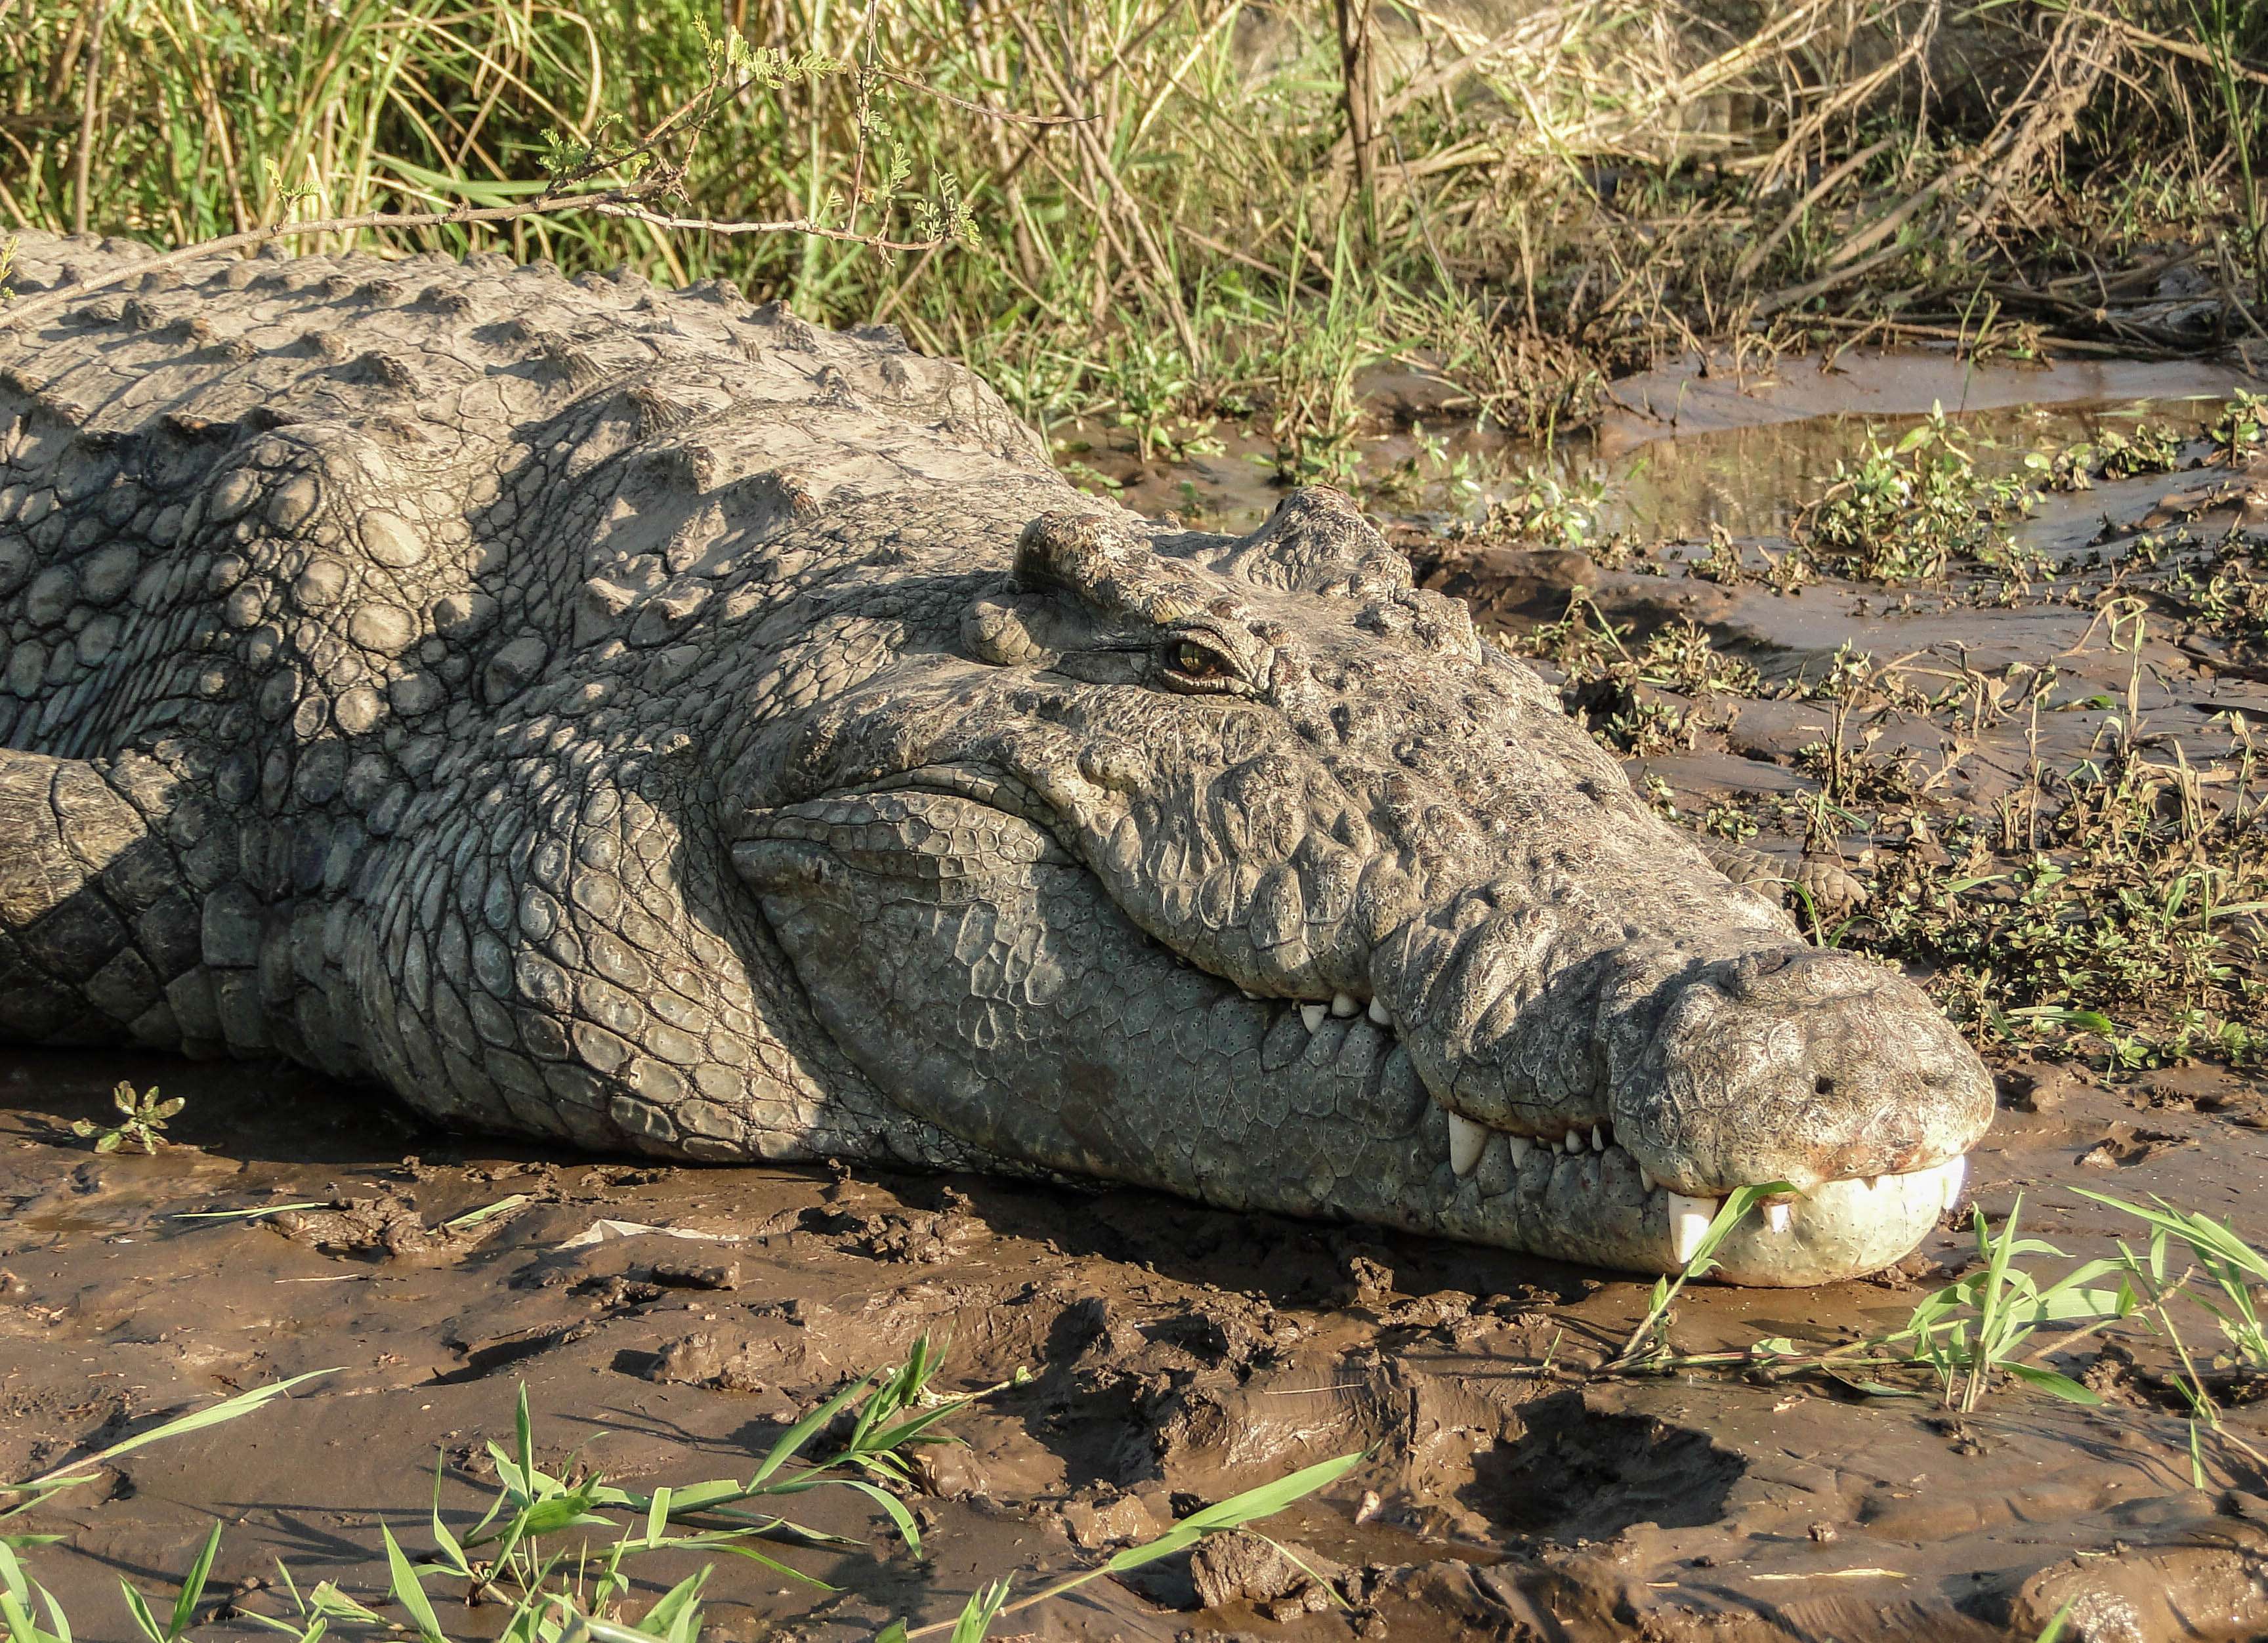 African crocodile in Lake Chamo, Ethiopia